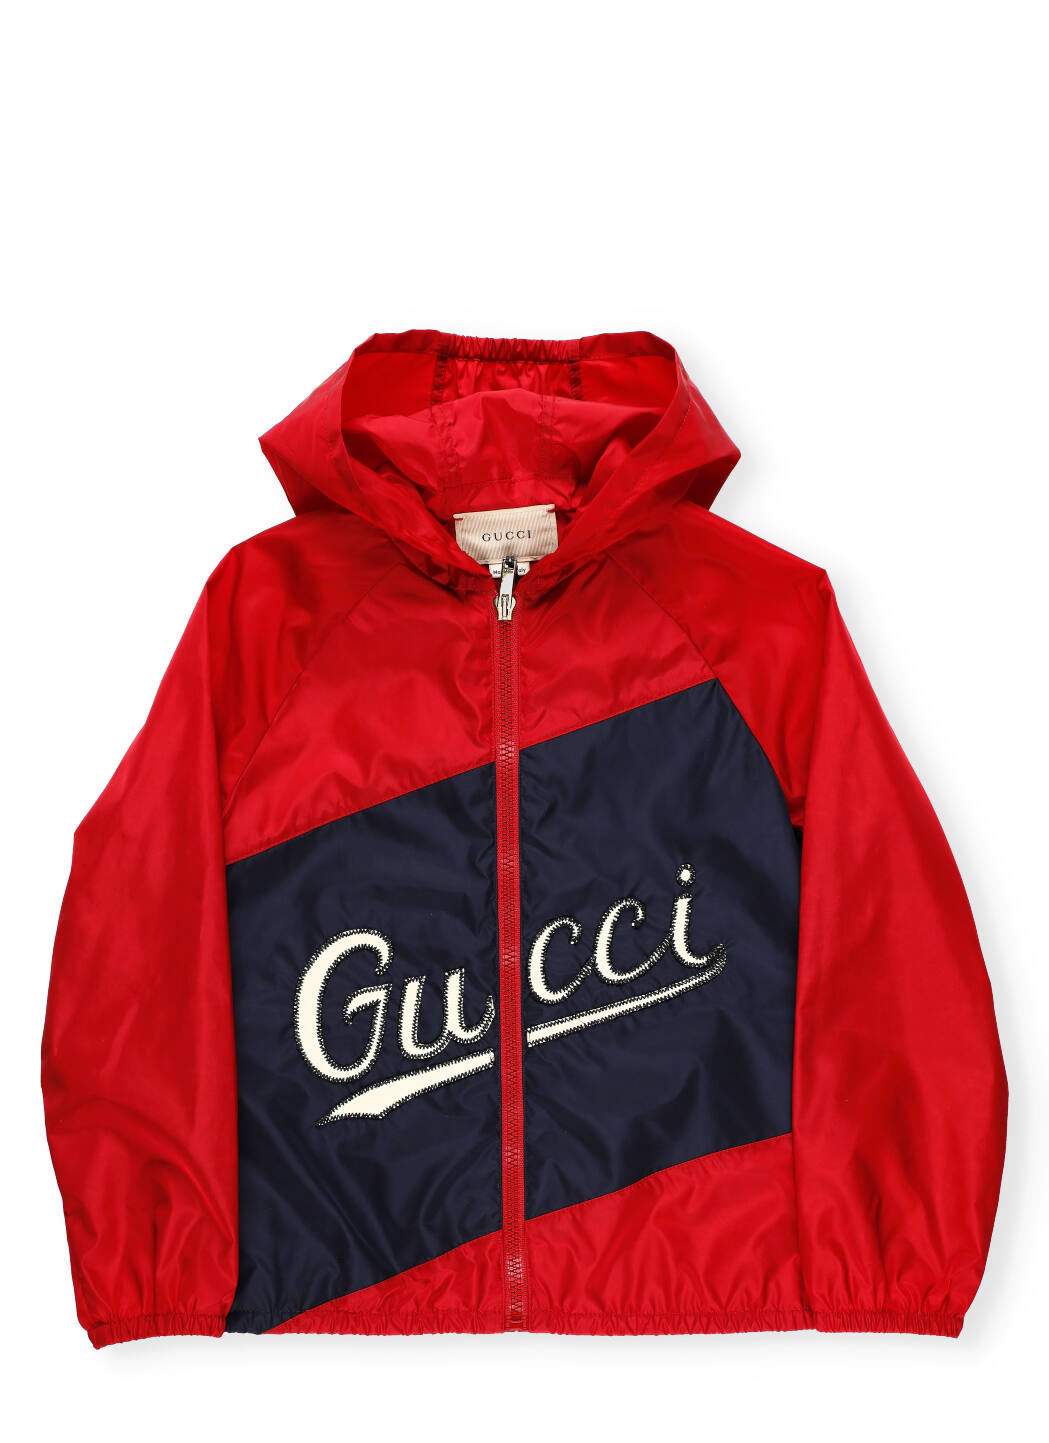 Gucci Jacket With Hood